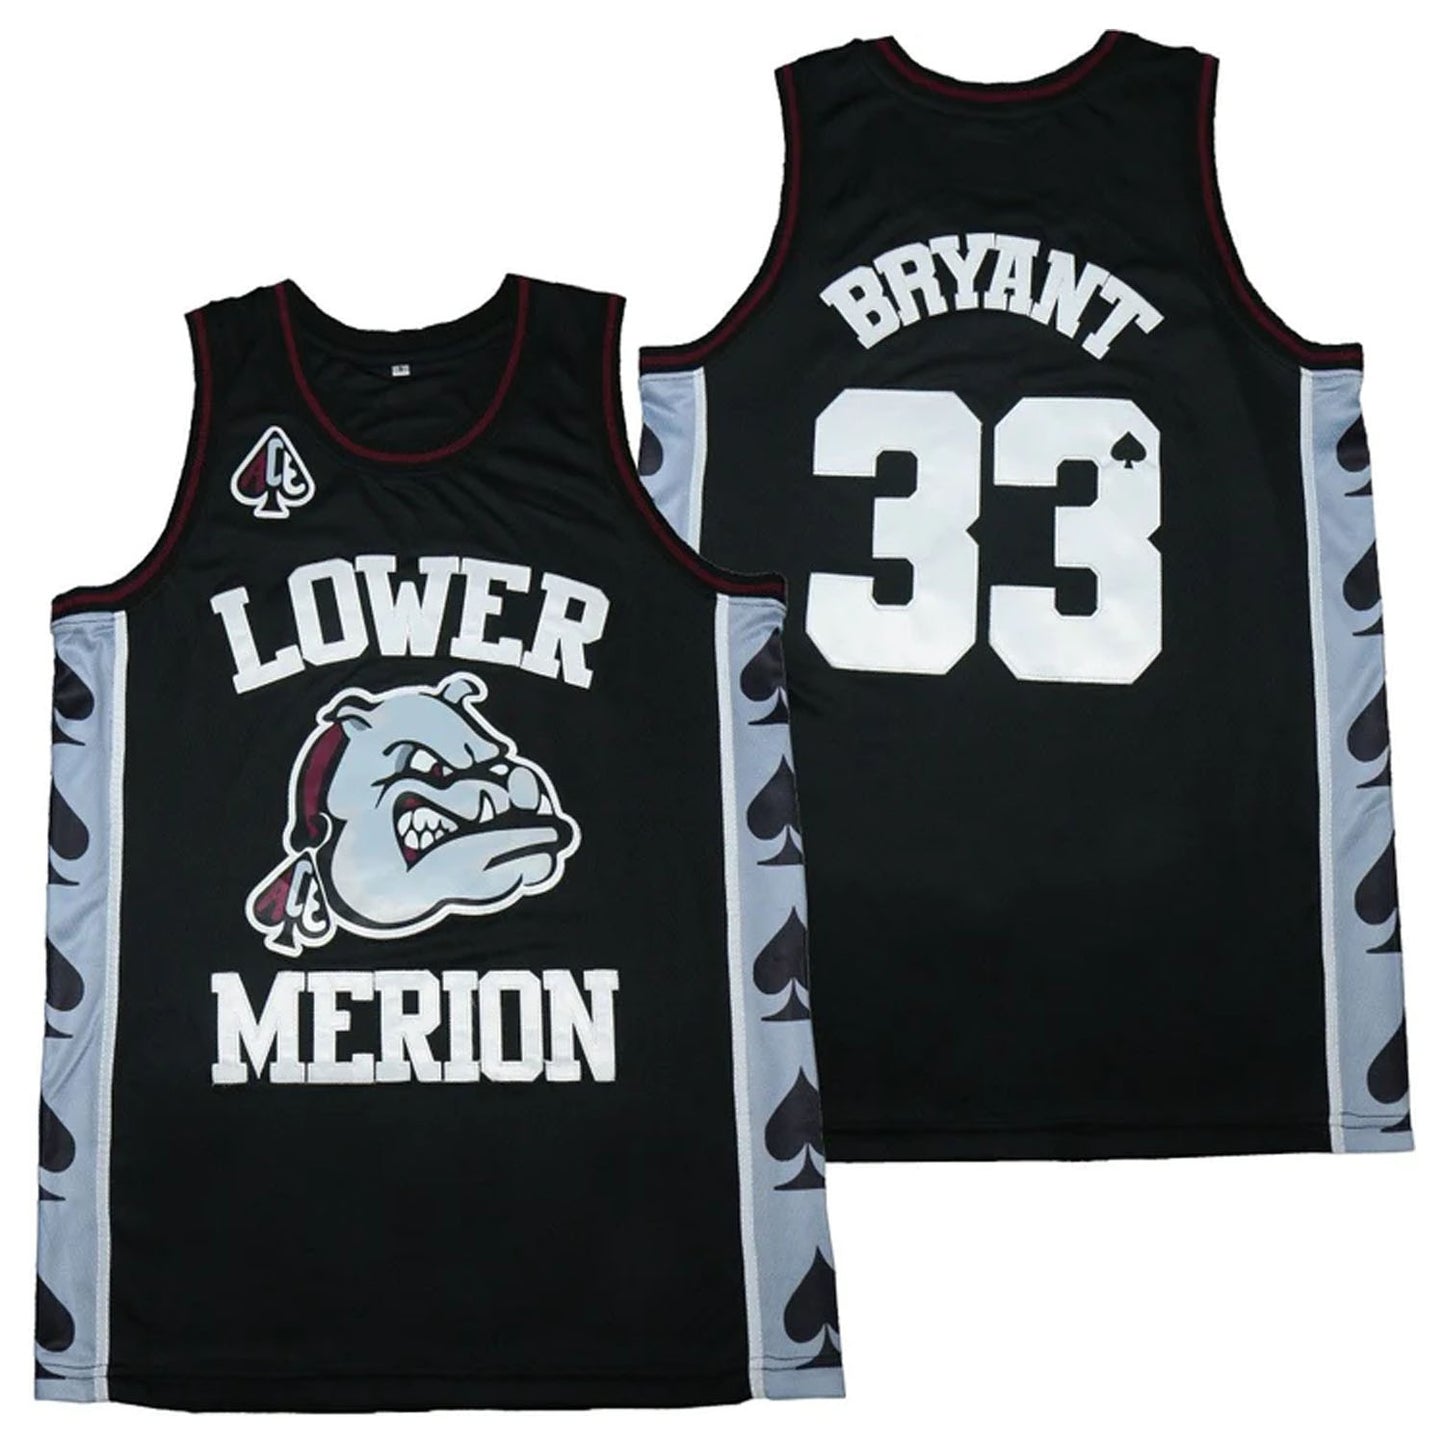 Kobe Bryant #33 Lower Merion Alternate High School Jersey